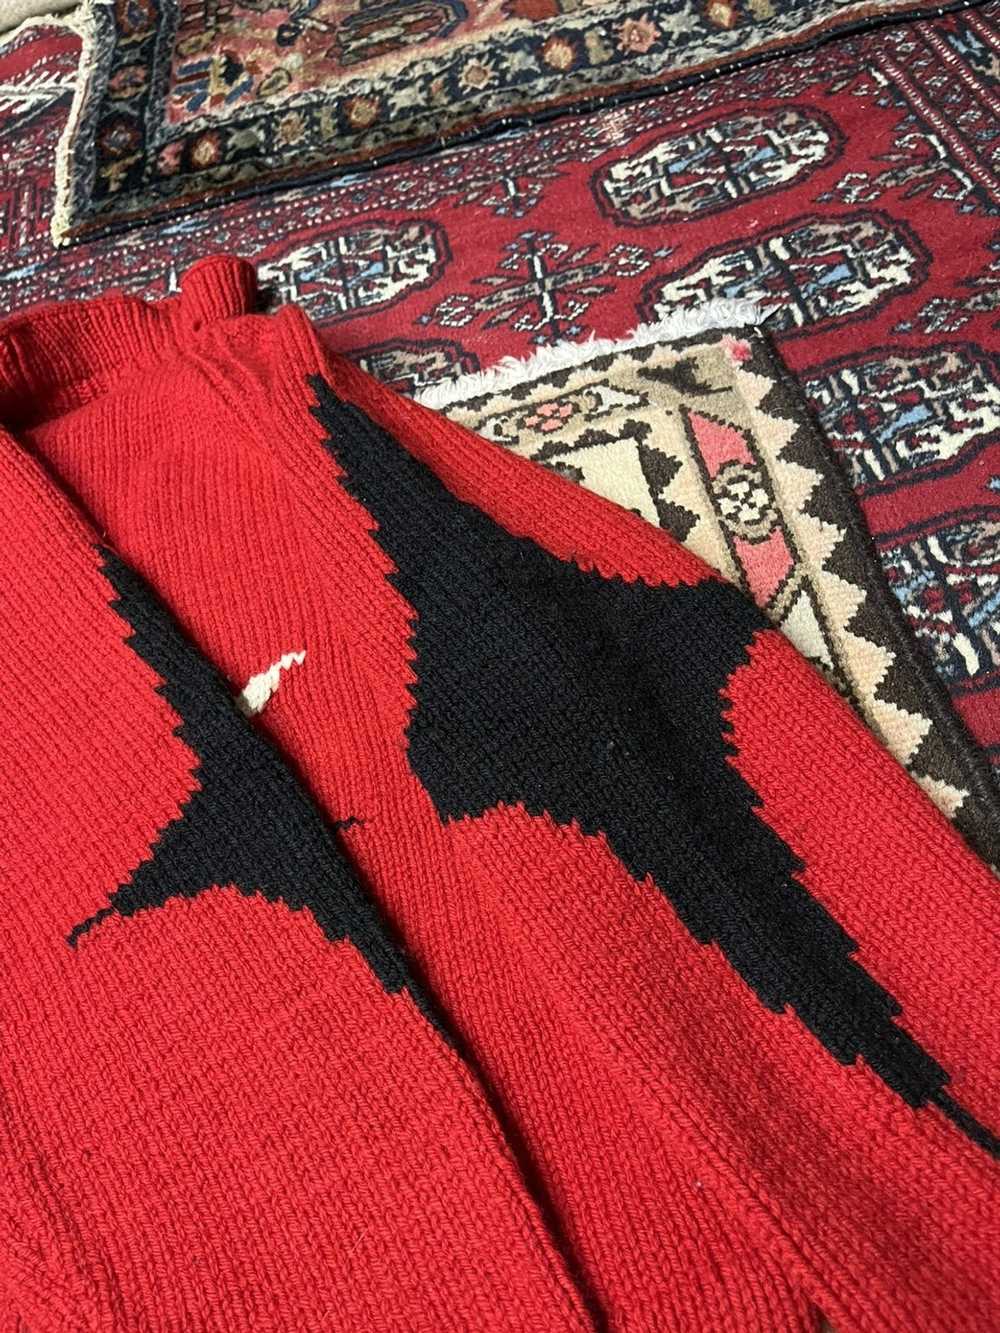 Vintage Vintage 70s handknit sweater - image 3